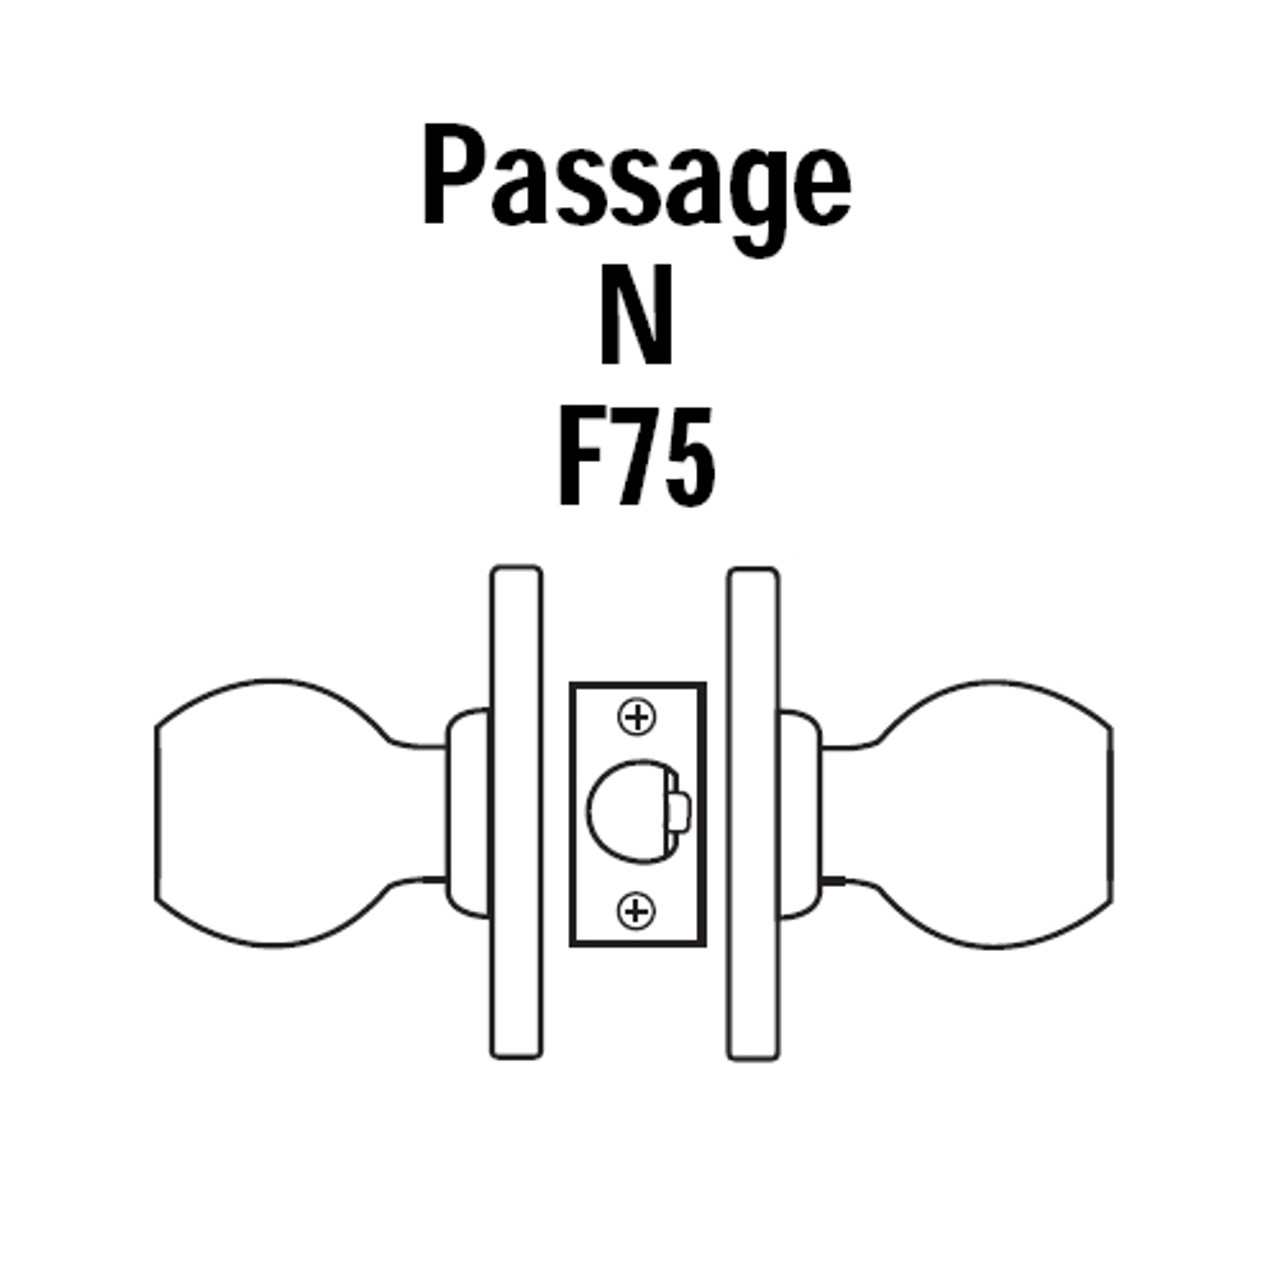 8K30N4CSTK611 Best 8K Series Passage Heavy Duty Cylindrical Knob Locks with Round Style in Bright Bronze